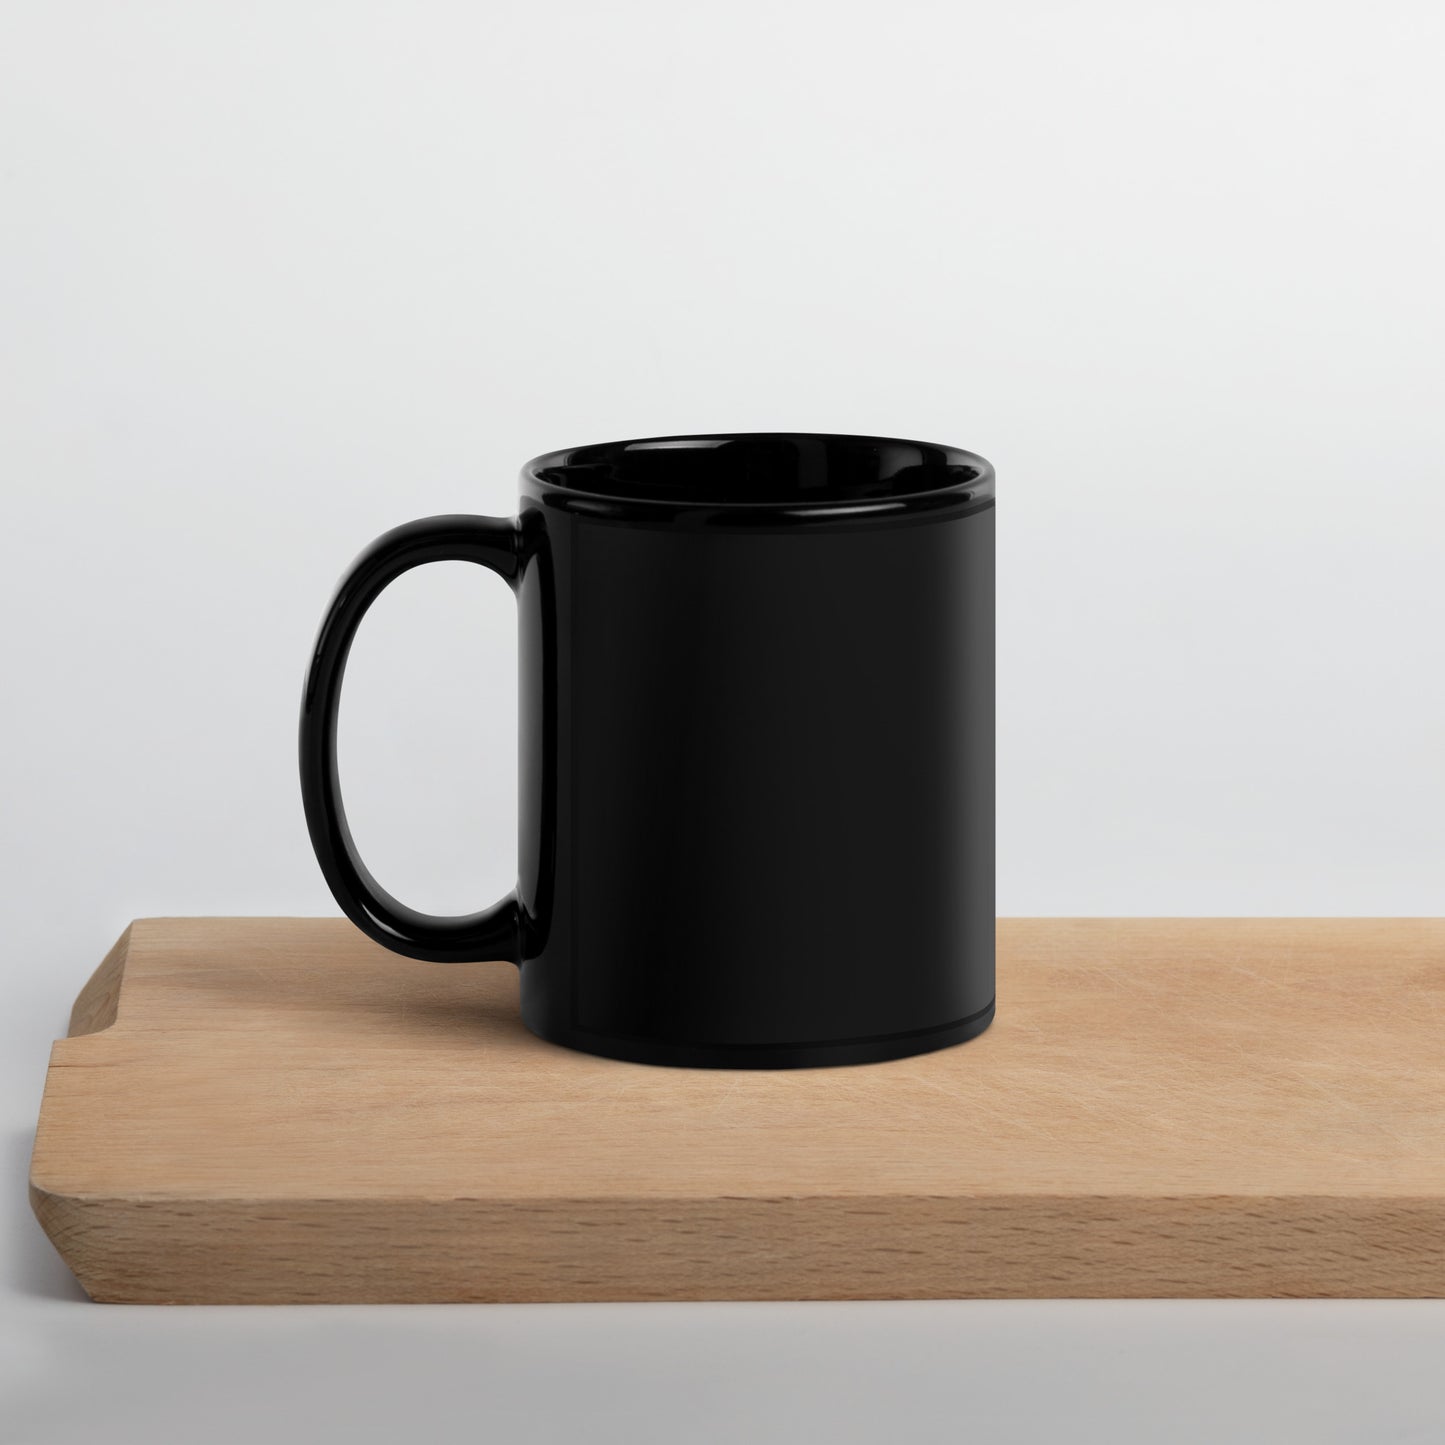 intenSati — Since 2002 Black Glossy Mug